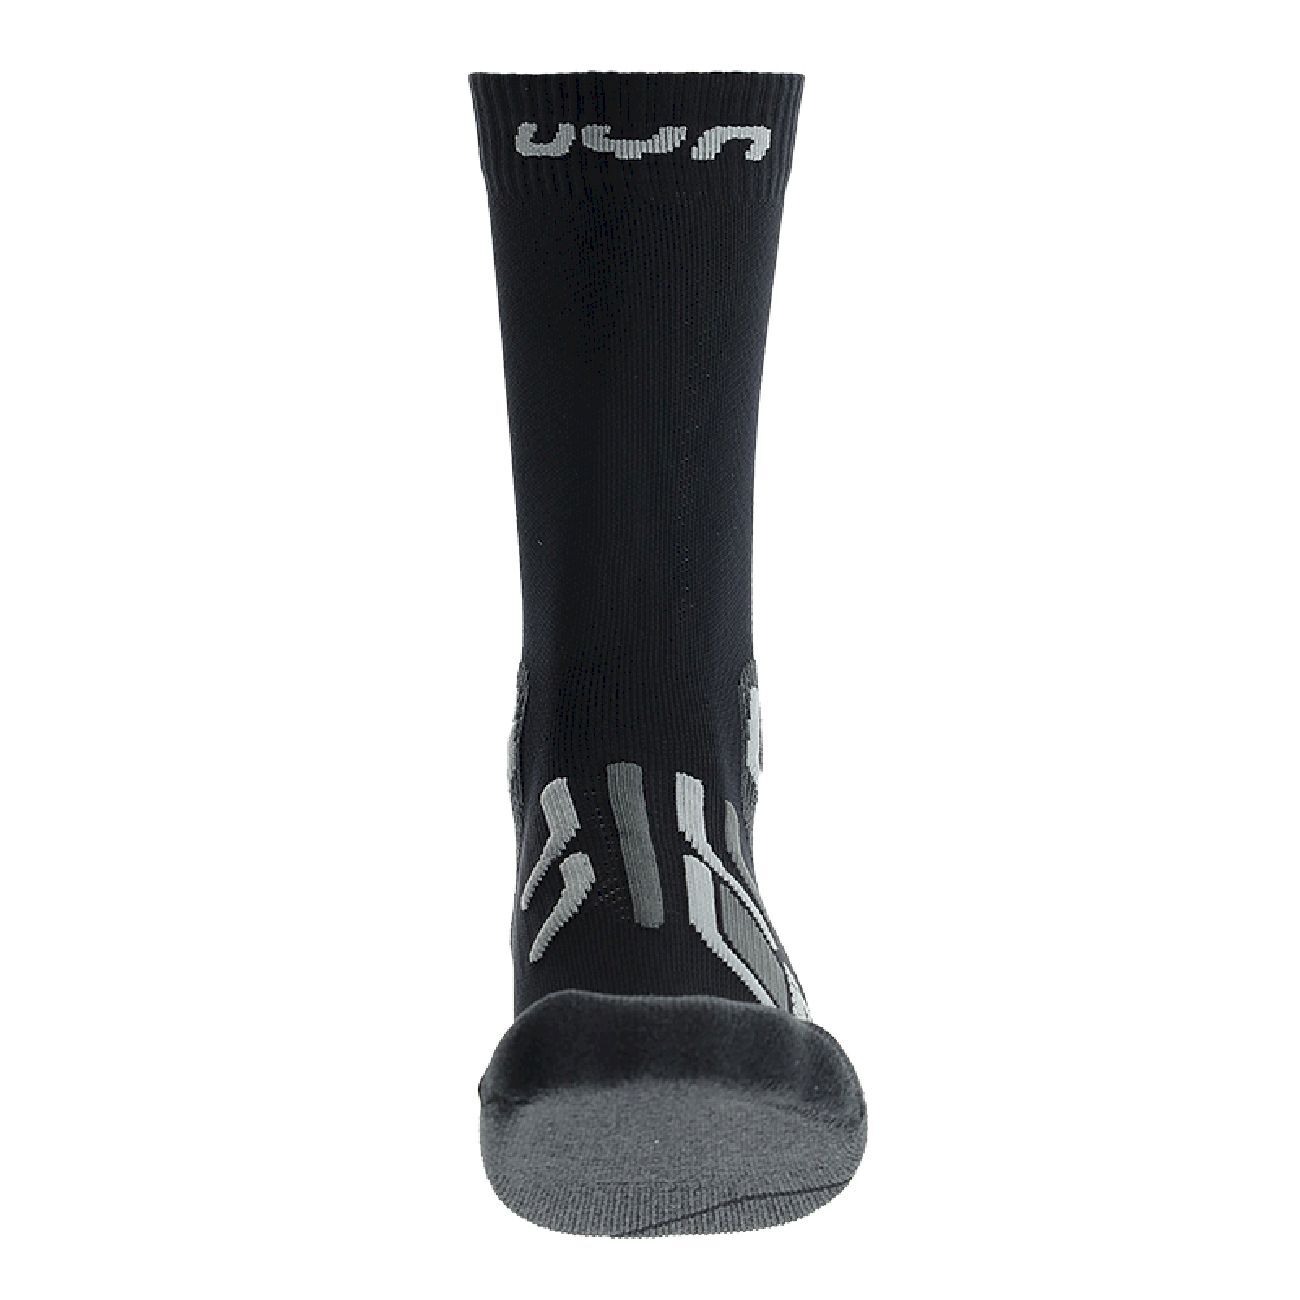 Uyn SMU Trekking Approach Socks - Hiking socks - Men's